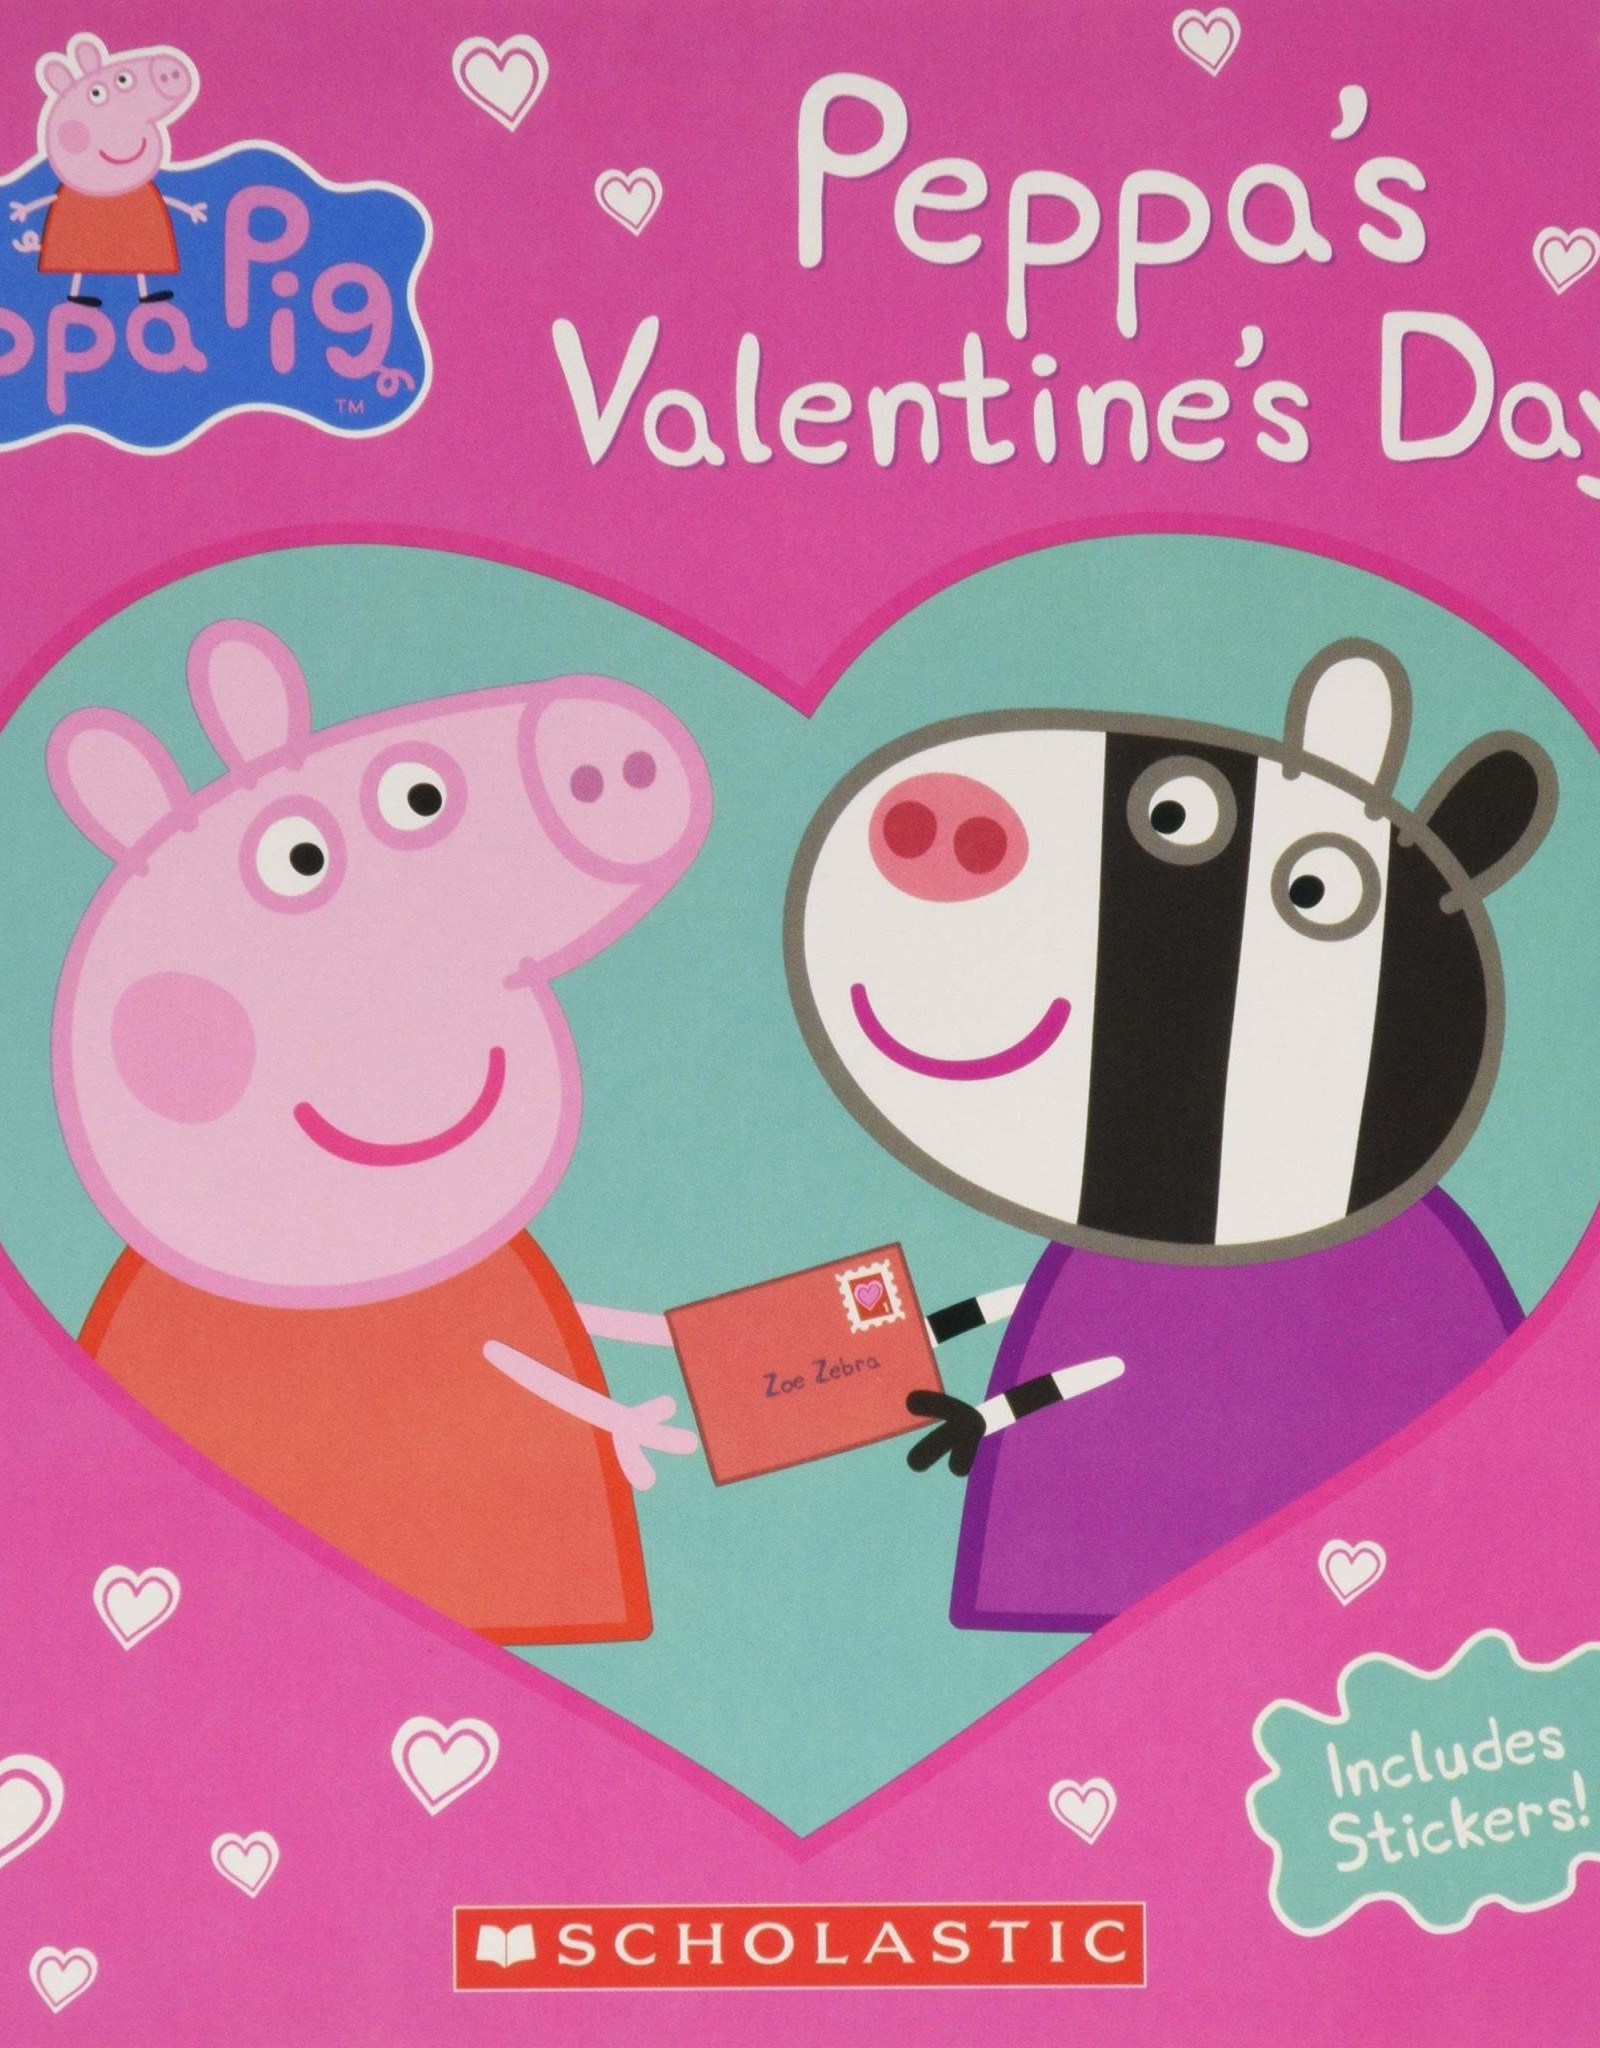 Scholastic Peppa's Valentine's Day